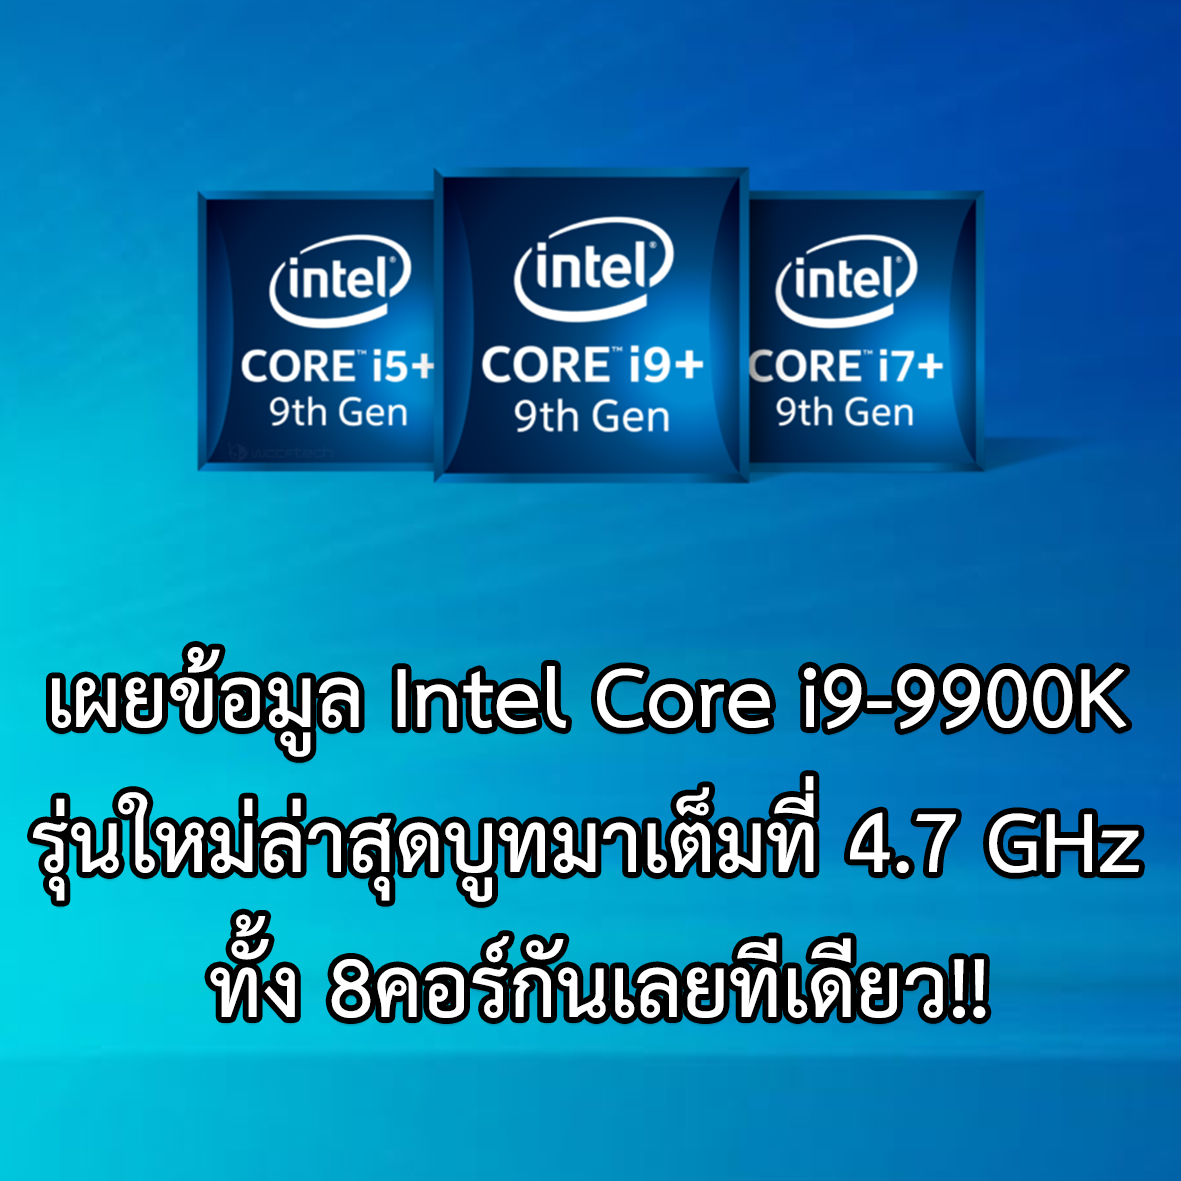 intel 9th gen 9000 series 47 เผยข้อมูล Intel Core i9 9900K รุ่นใหม่ล่าสุดบูทมาเต็มที่ 4.7 GHz ทั้ง 8คอร์กันเลยทีเดียว!!